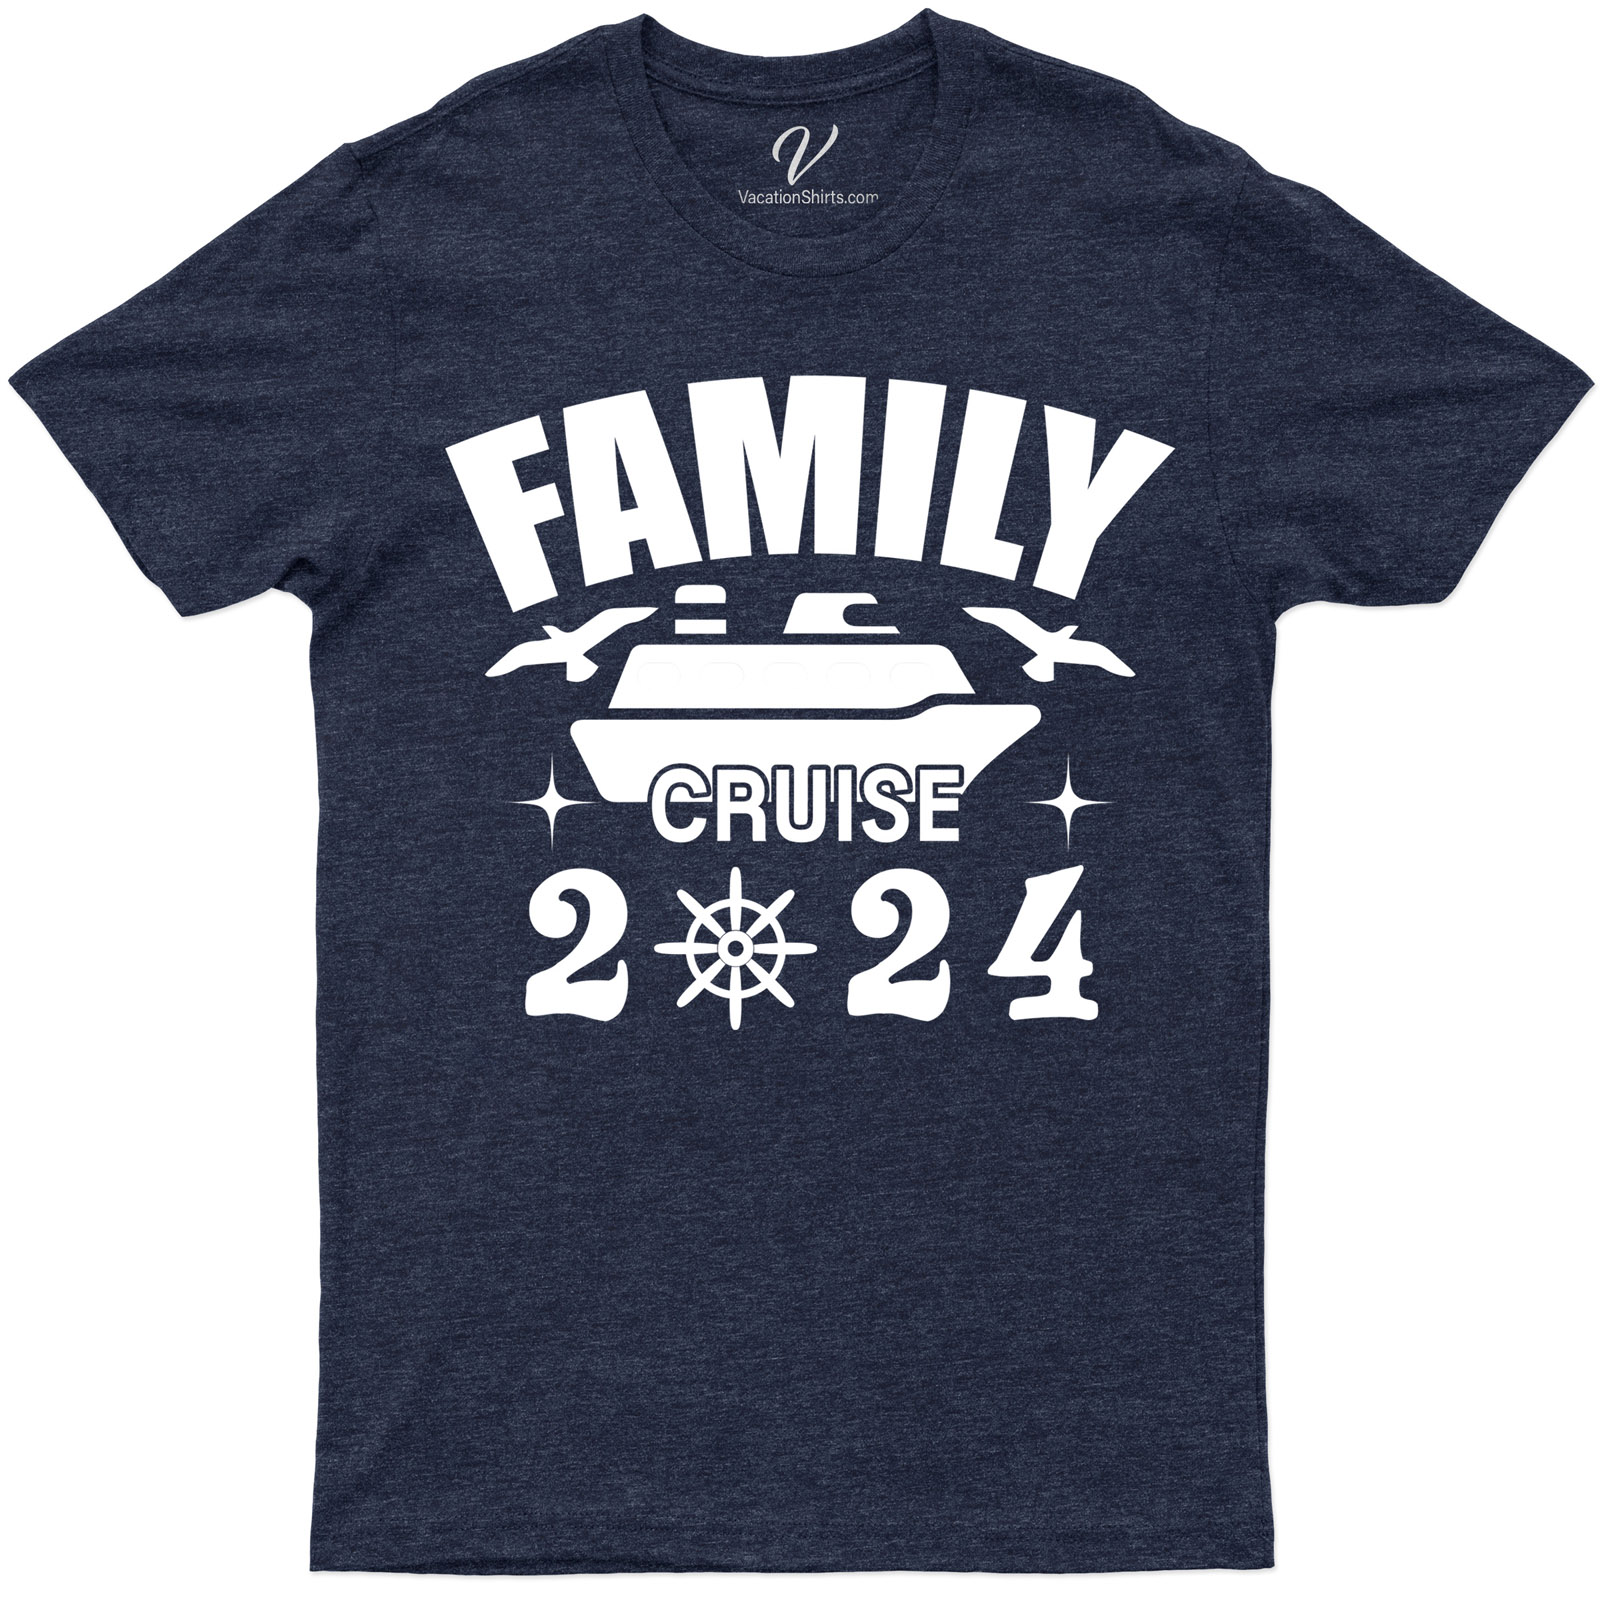 2024 Family Cruise Tee Adventure Vacation Shirts VacationShirts